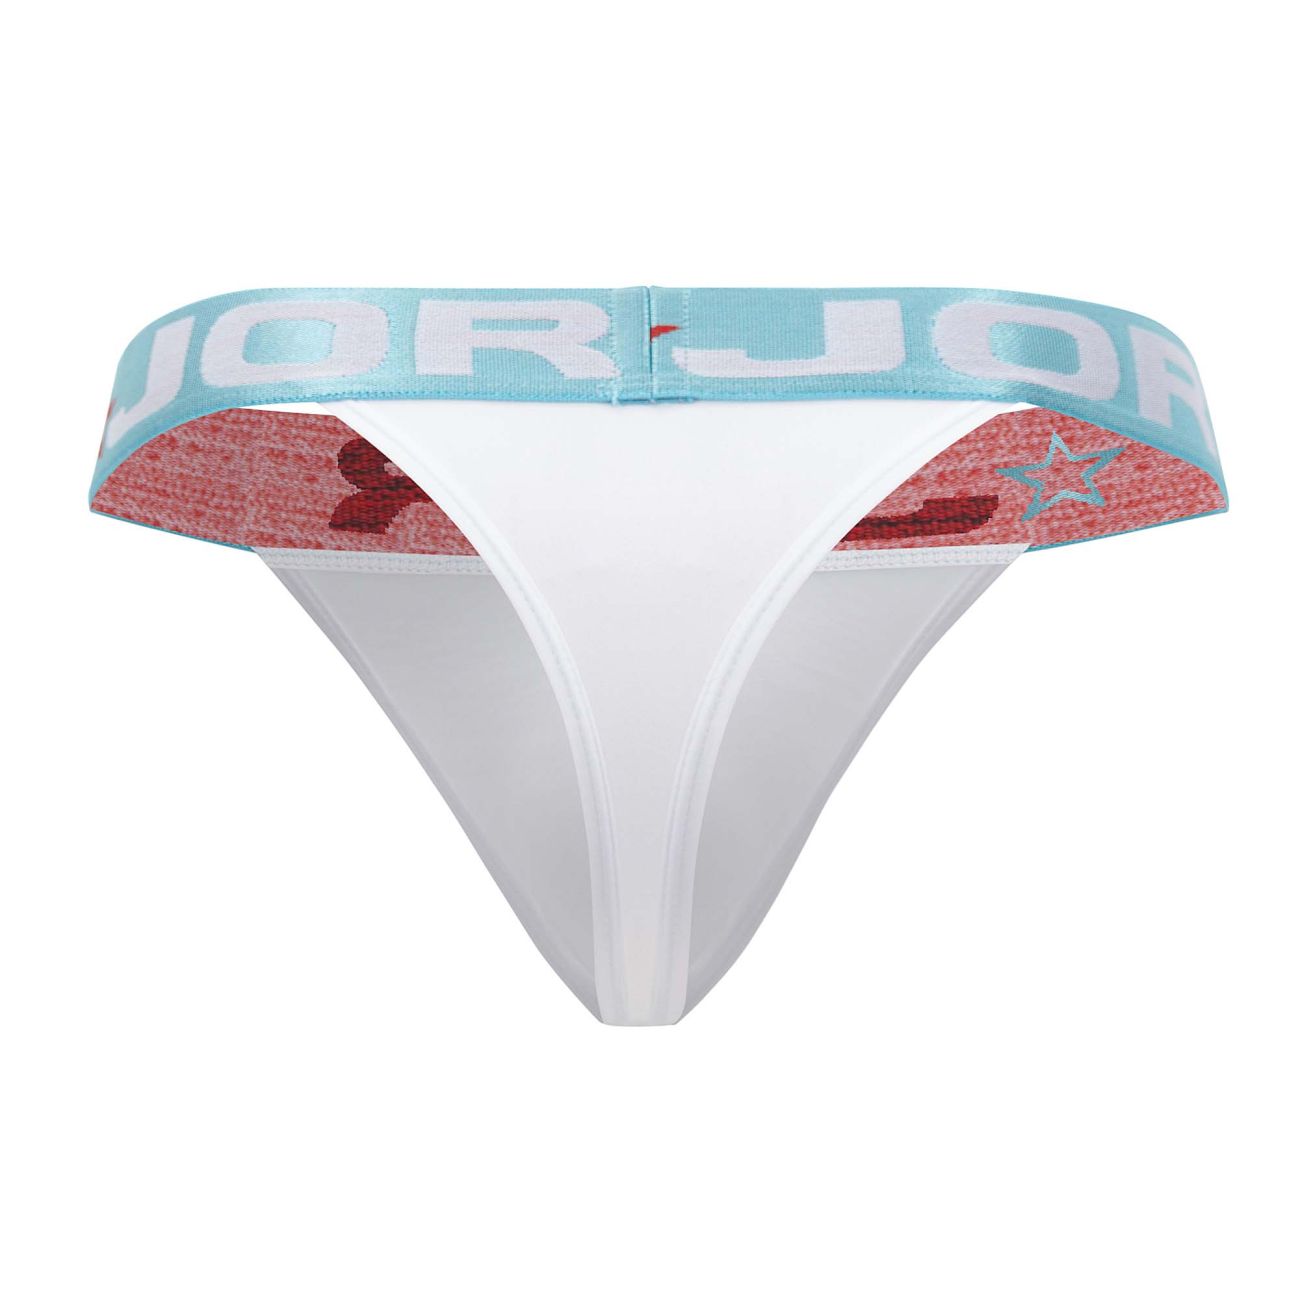 Jor Thong 1610 Underwear- CITYBOYZ★USA